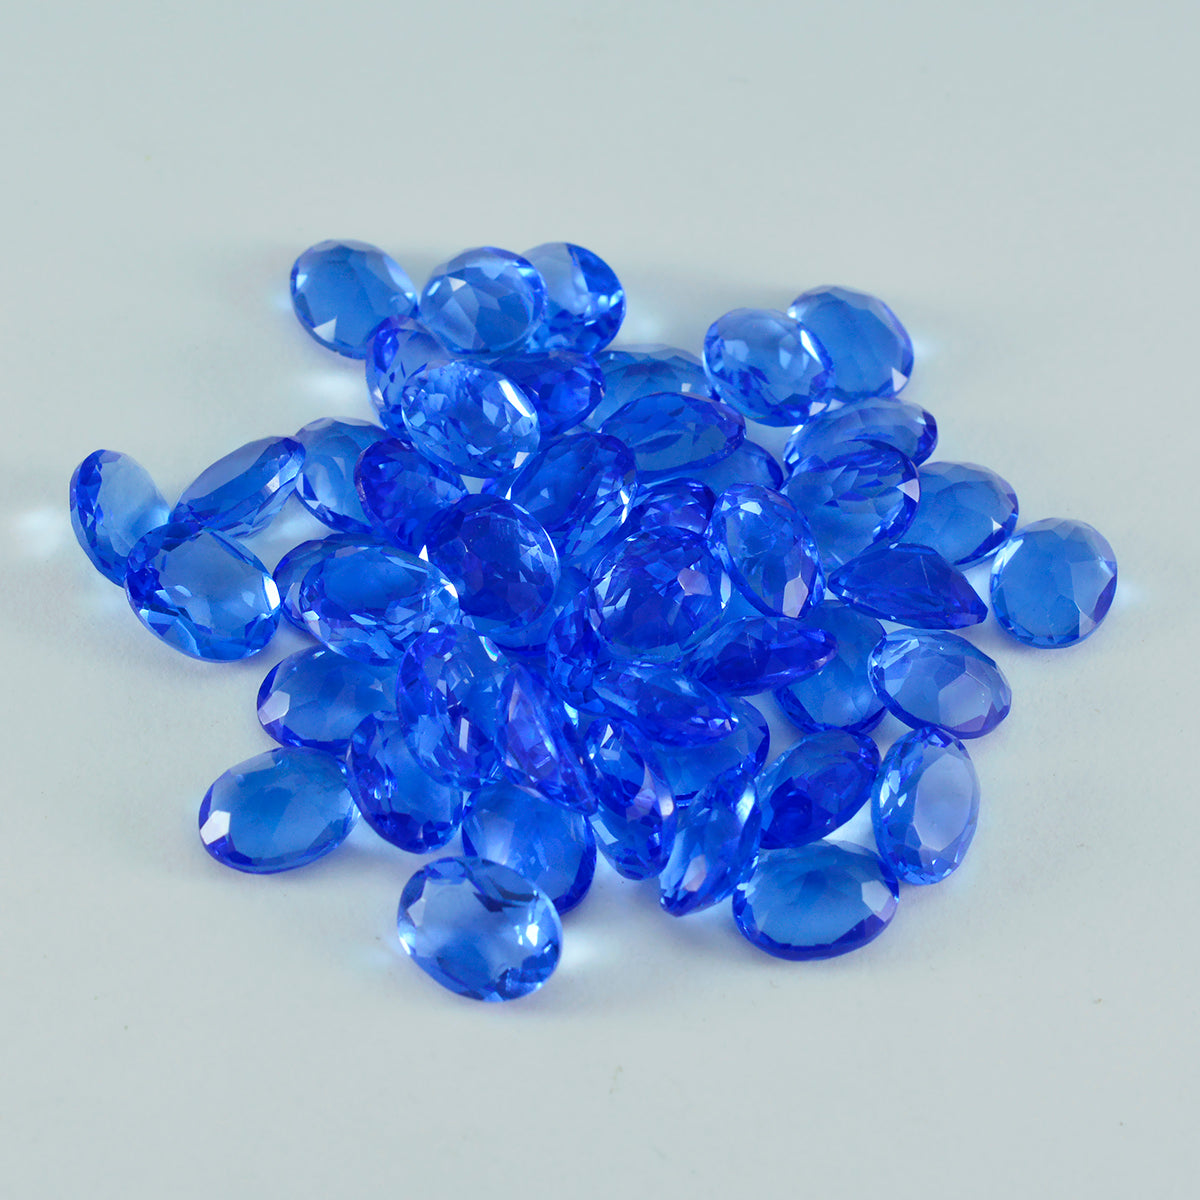 Riyogems 1 Stück blauer Saphir, CZ, facettiert, 4 x 6 mm, ovale Form, AAA-Qualität, loser Stein